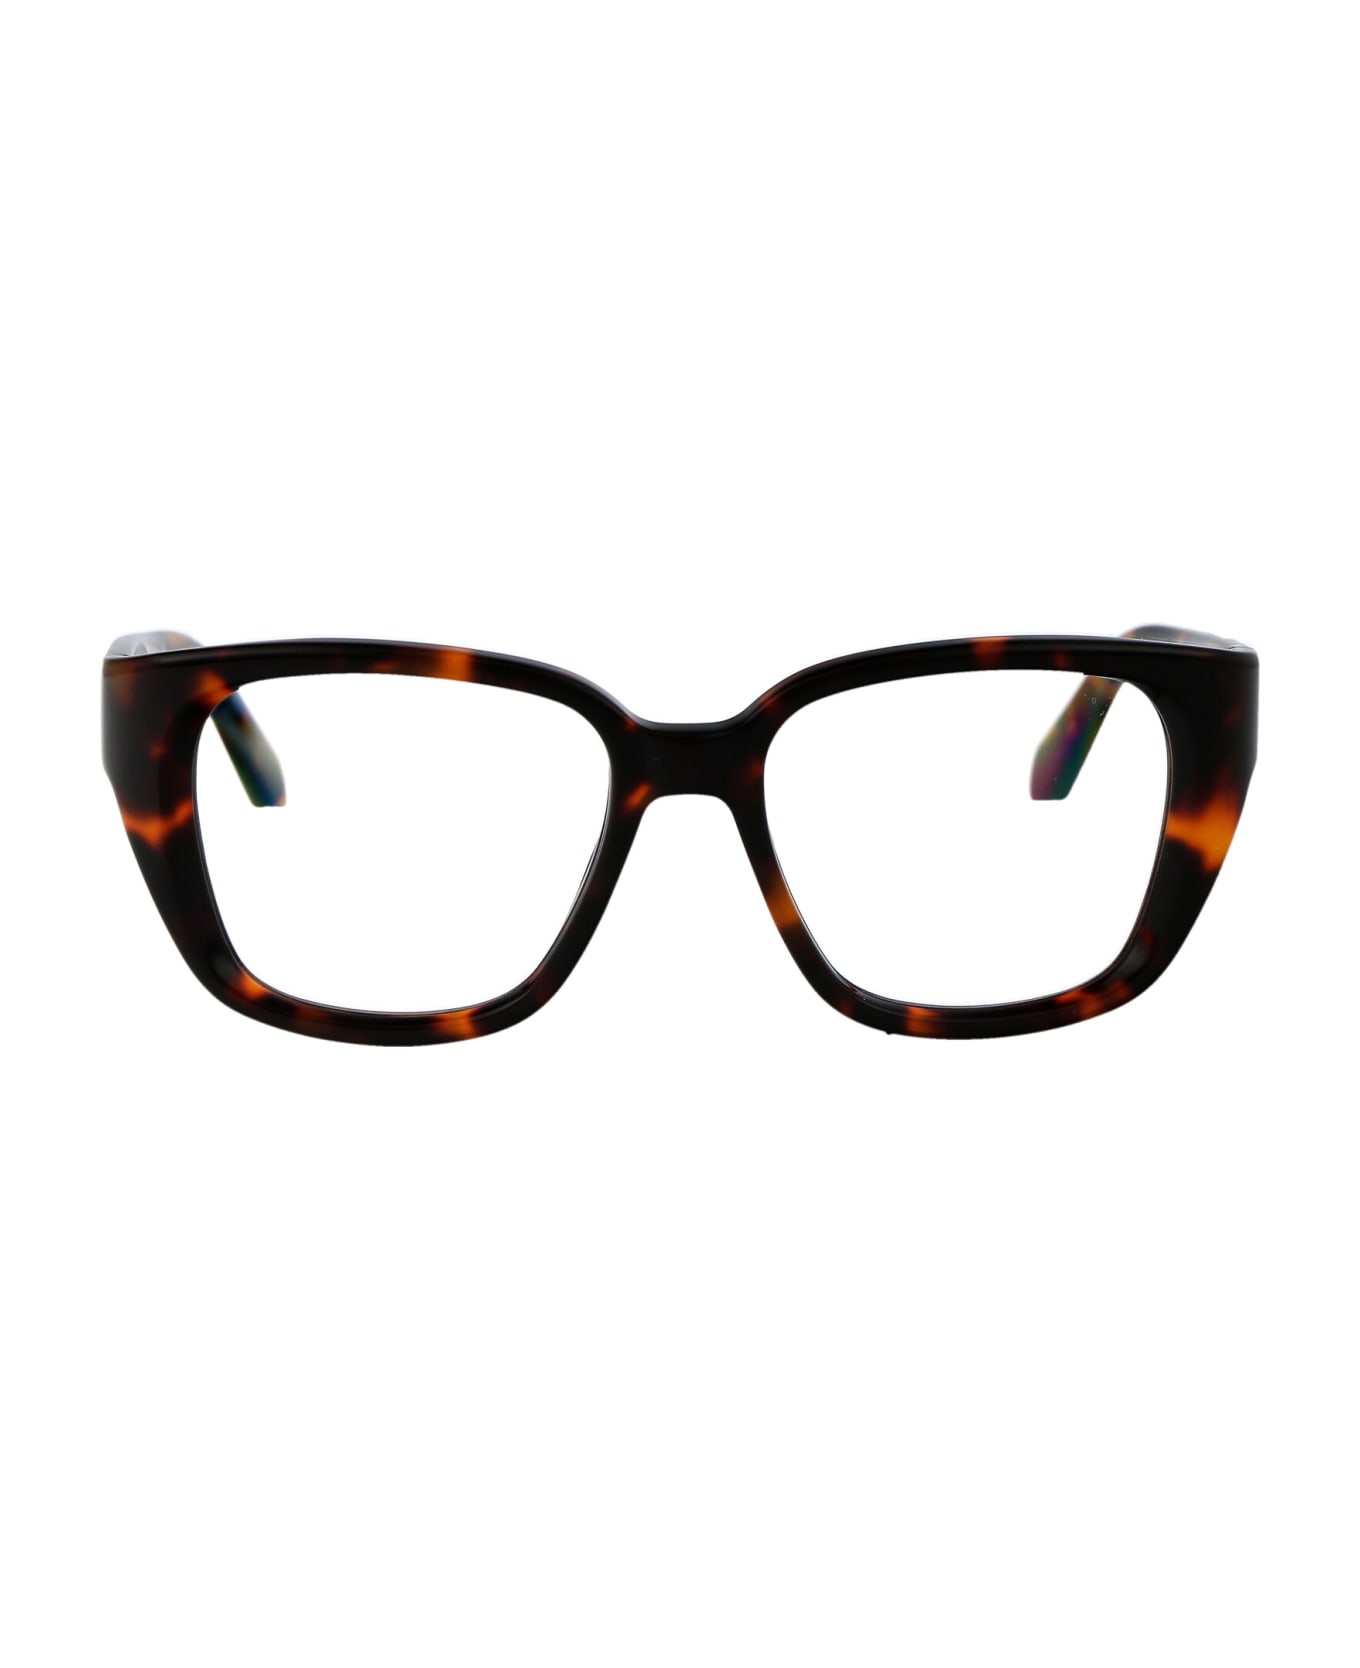 Off-White Optical Style 63 Glasses - 6000 HAVANA